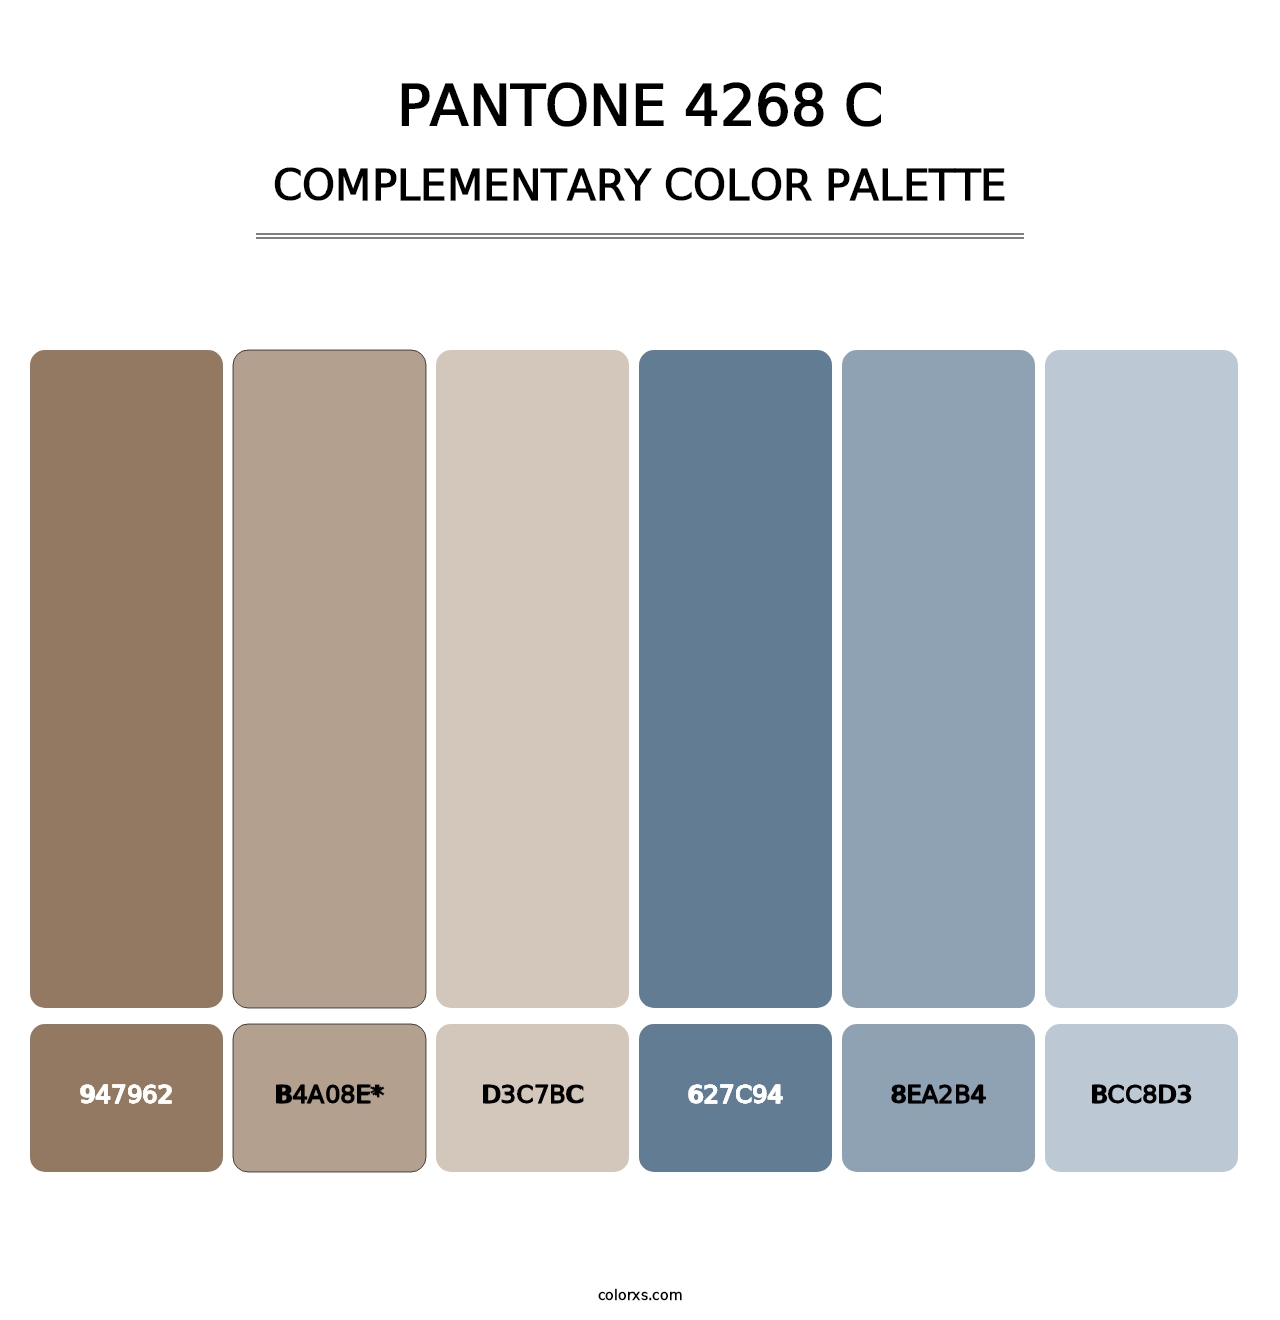 PANTONE 4268 C - Complementary Color Palette